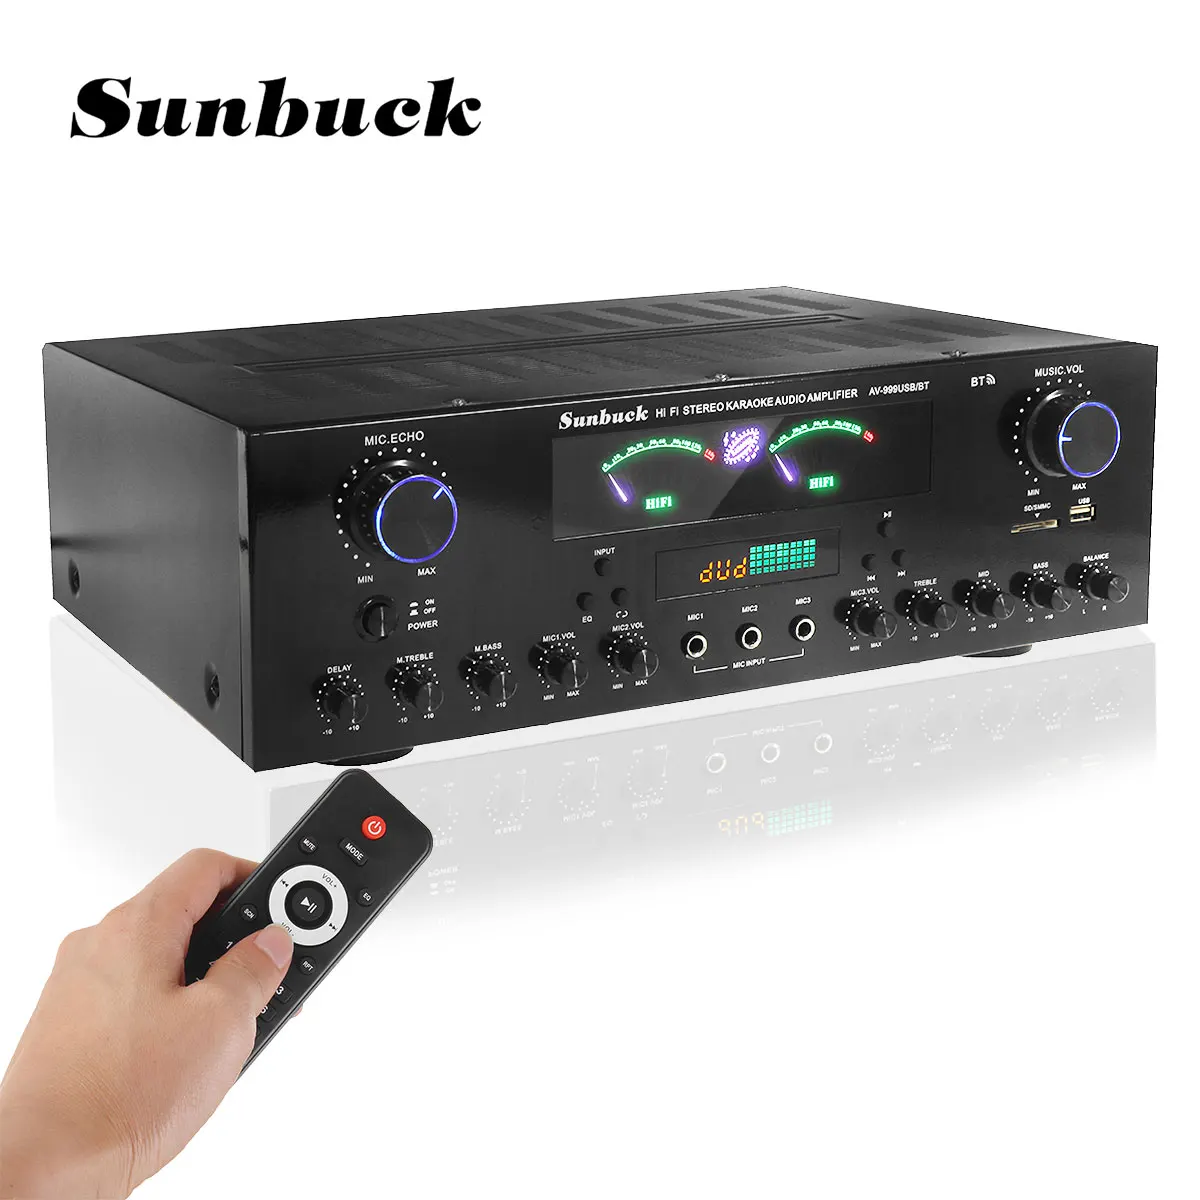 

SUNBUCK 3000W bluetooth 7 Channel Audio Power Amplifier 110V 220V AV Amp Speaker with Remote Control Support FM USB SD Cards